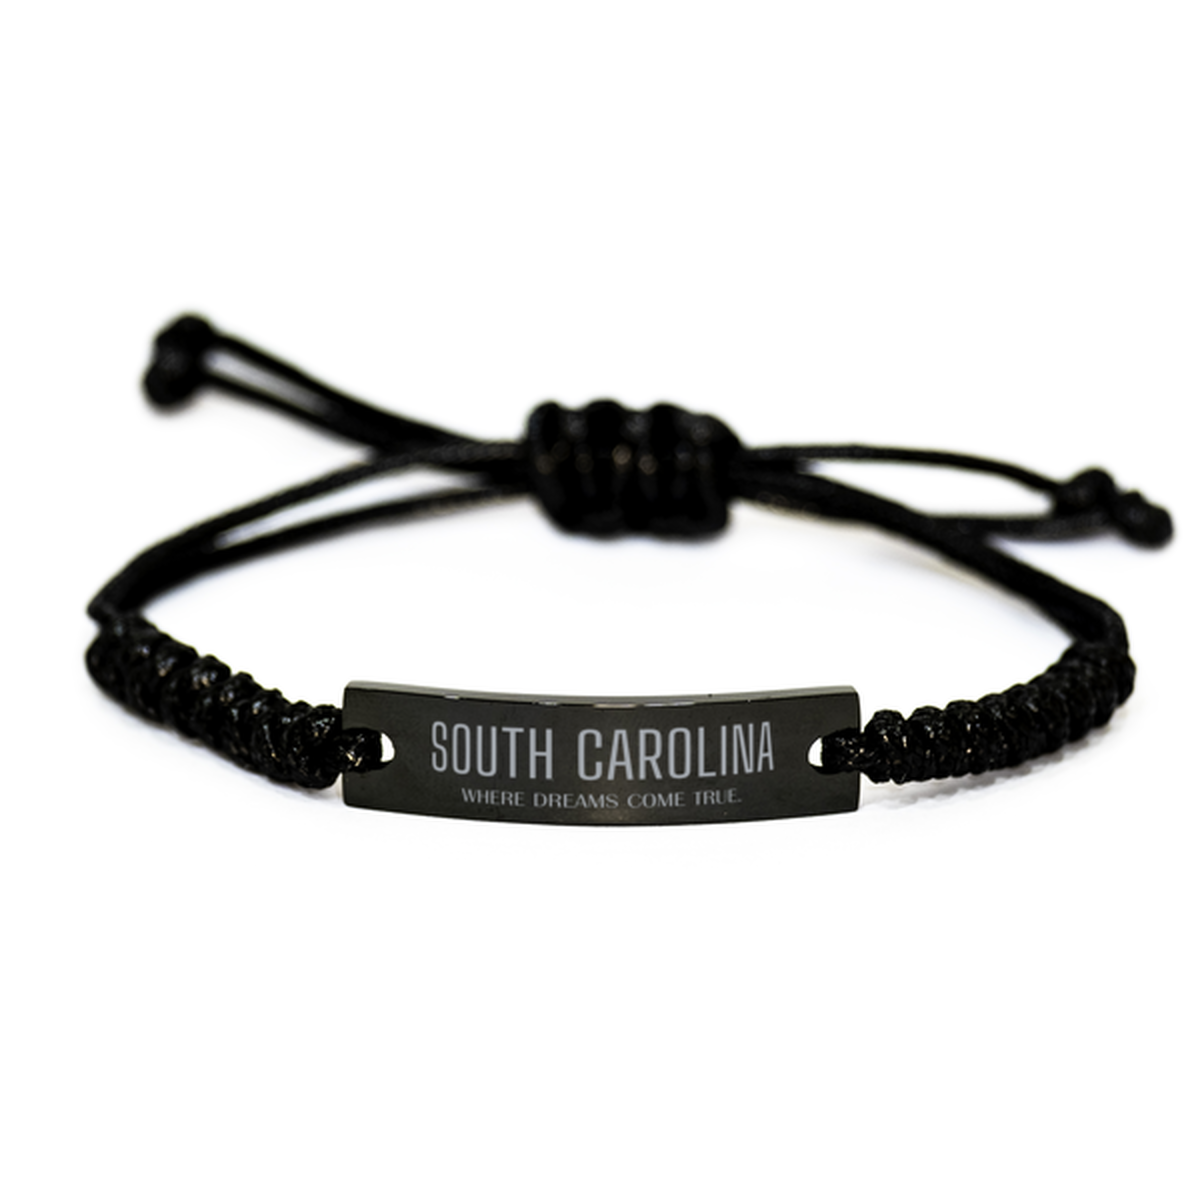 Love South Carolina State Black Rope Bracelet, South Carolina Where dreams come true, Birthday Inspirational Gifts For South Carolina Men, Women, Friends